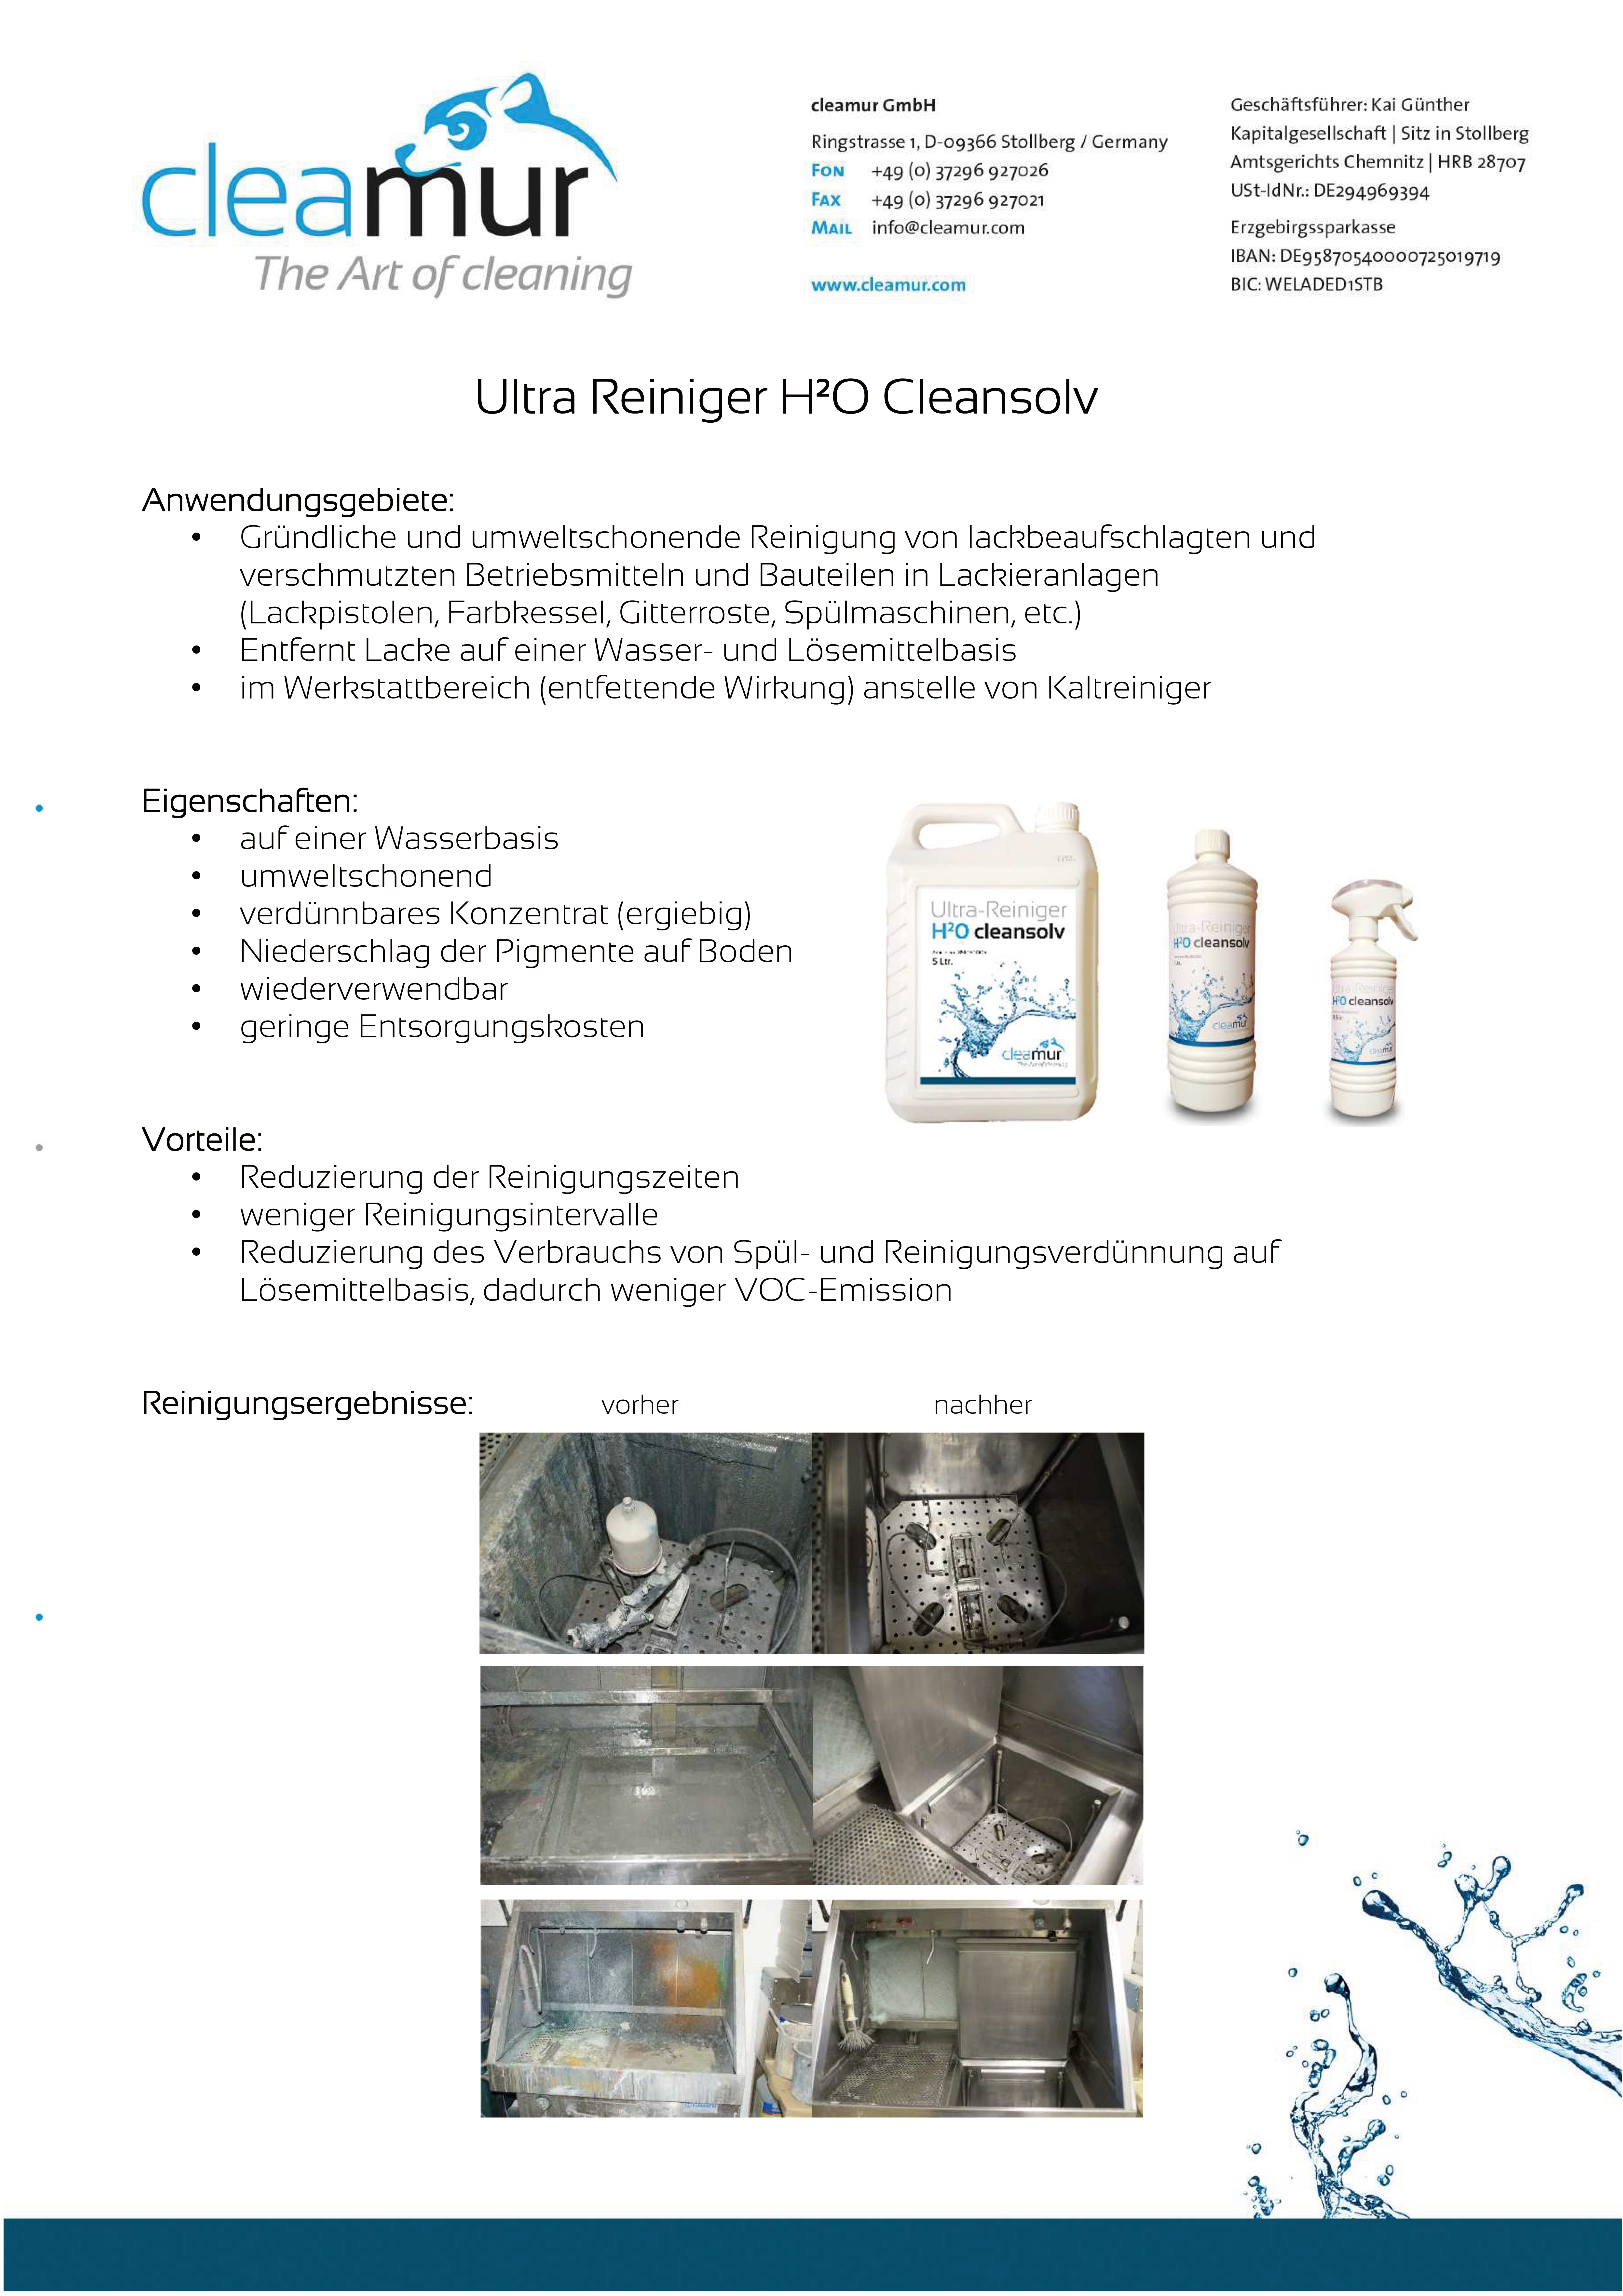 Cleamur Ultra Reiniger H²O cleansolv, 1 l